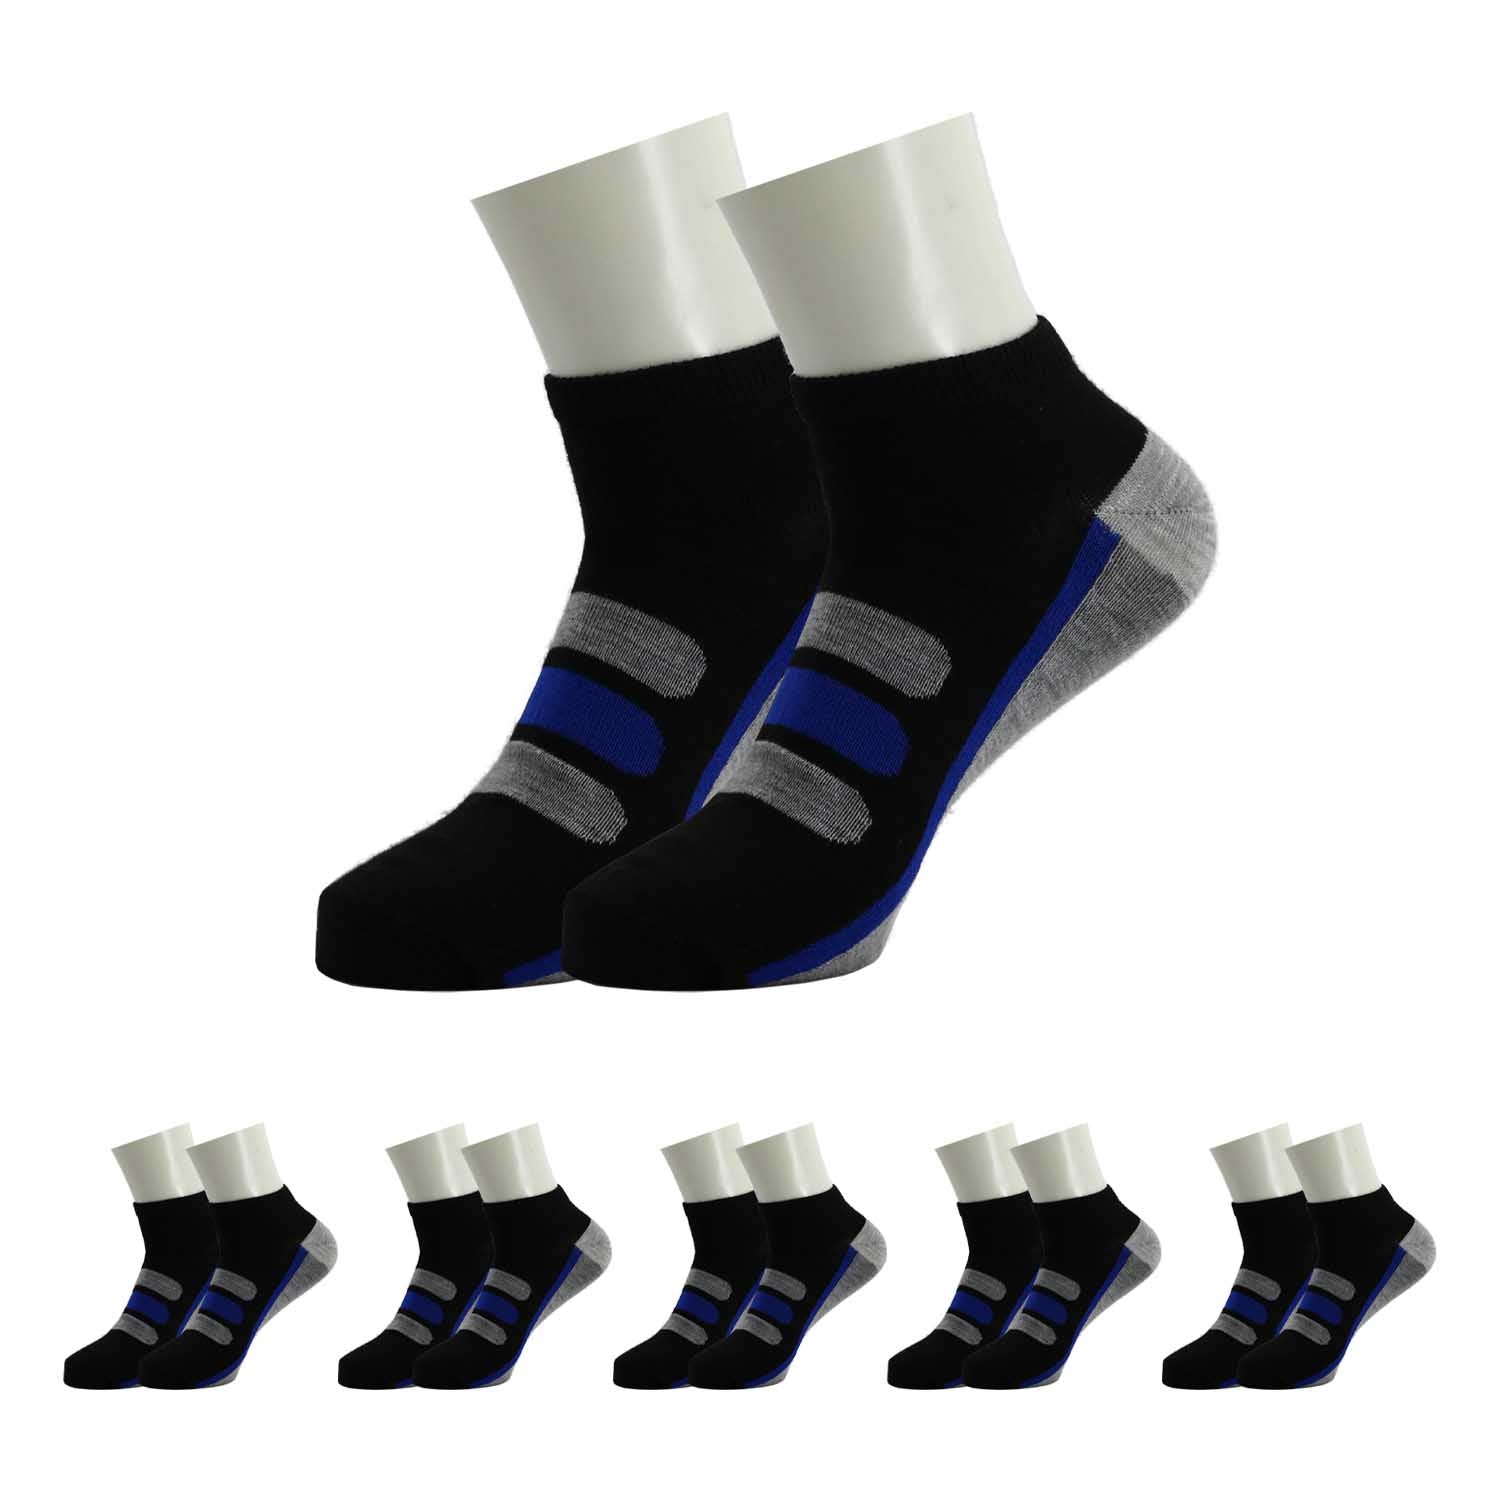 Men's Low Cut Wholesale Sock, Size 10-13 in Assorted Designs - Bulk Case of 144 Pairs